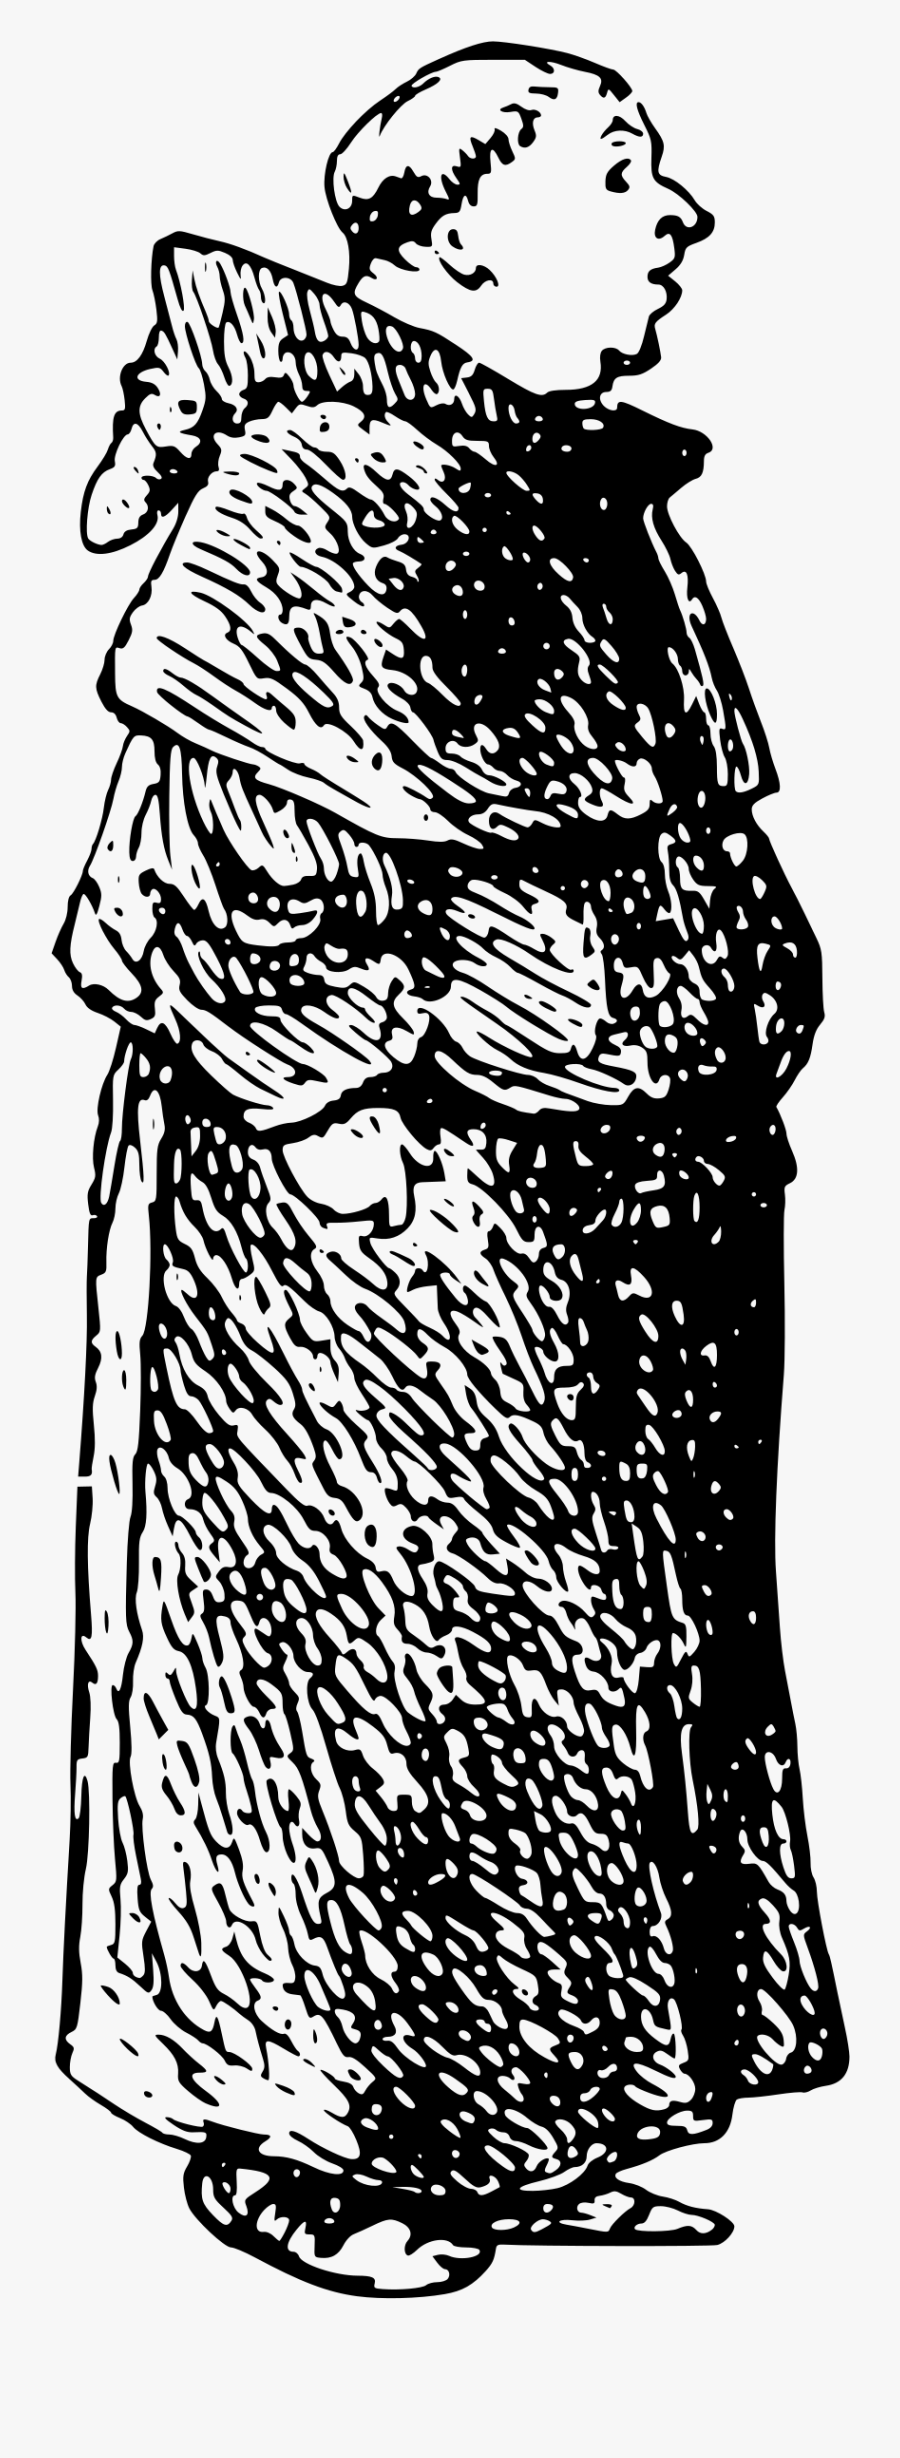 Transparent Monk Png - Monk Black And White Clipart, Transparent Clipart